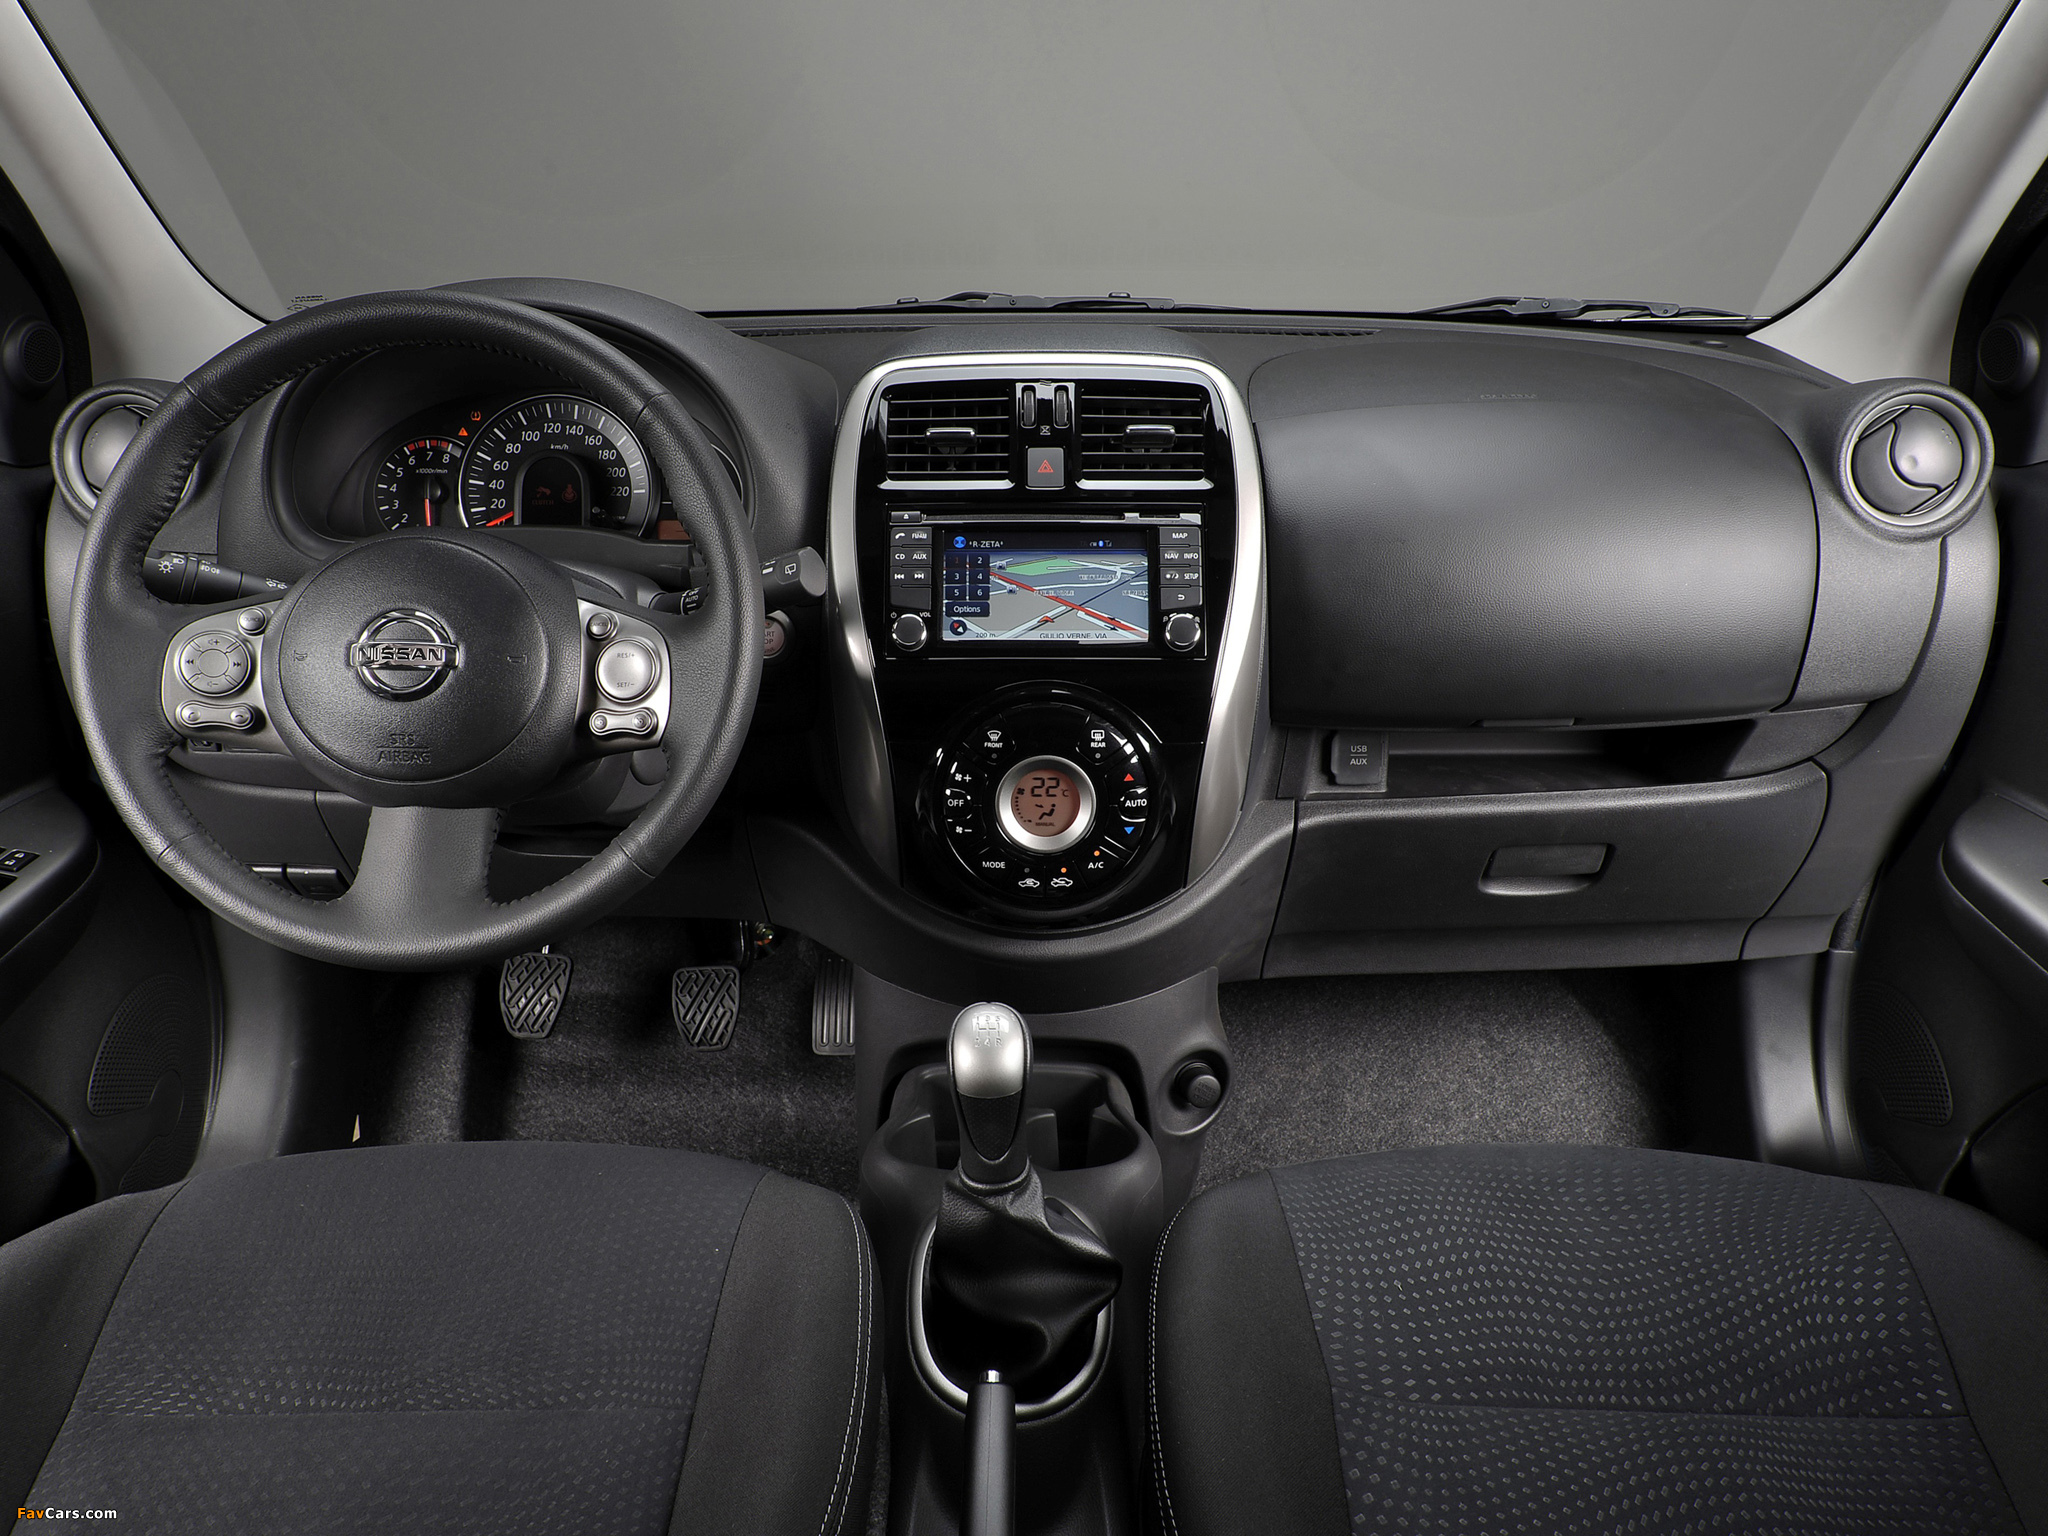 Nissan Micra (K13) 2013 images (2048x1536)